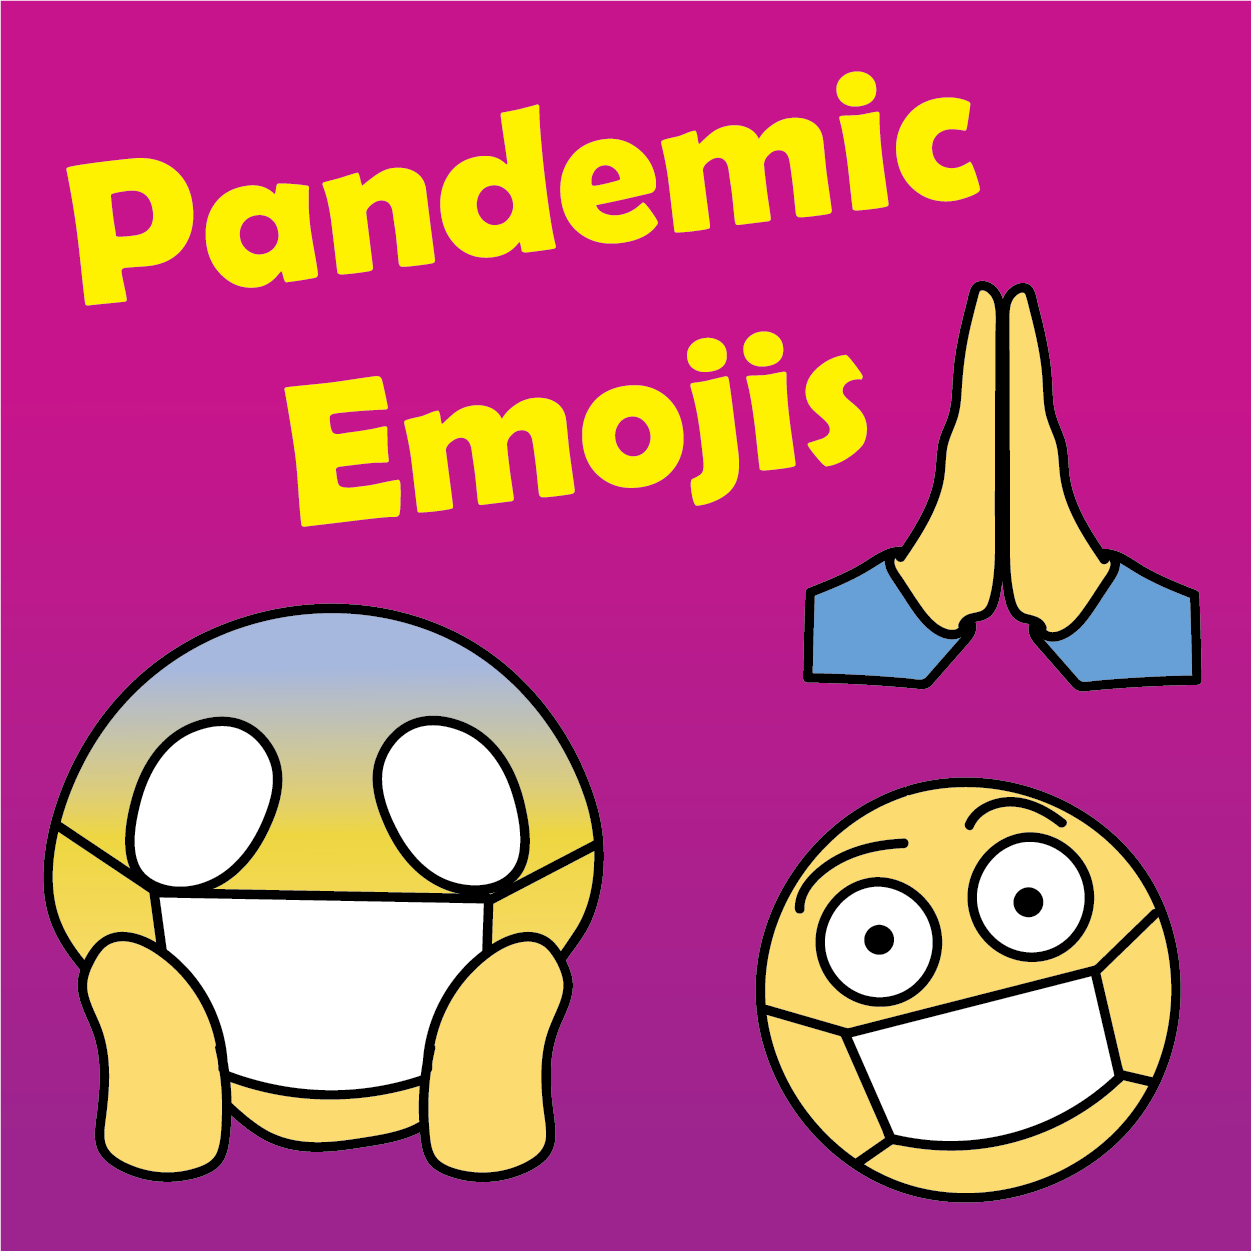 Pandemic emojis, purple